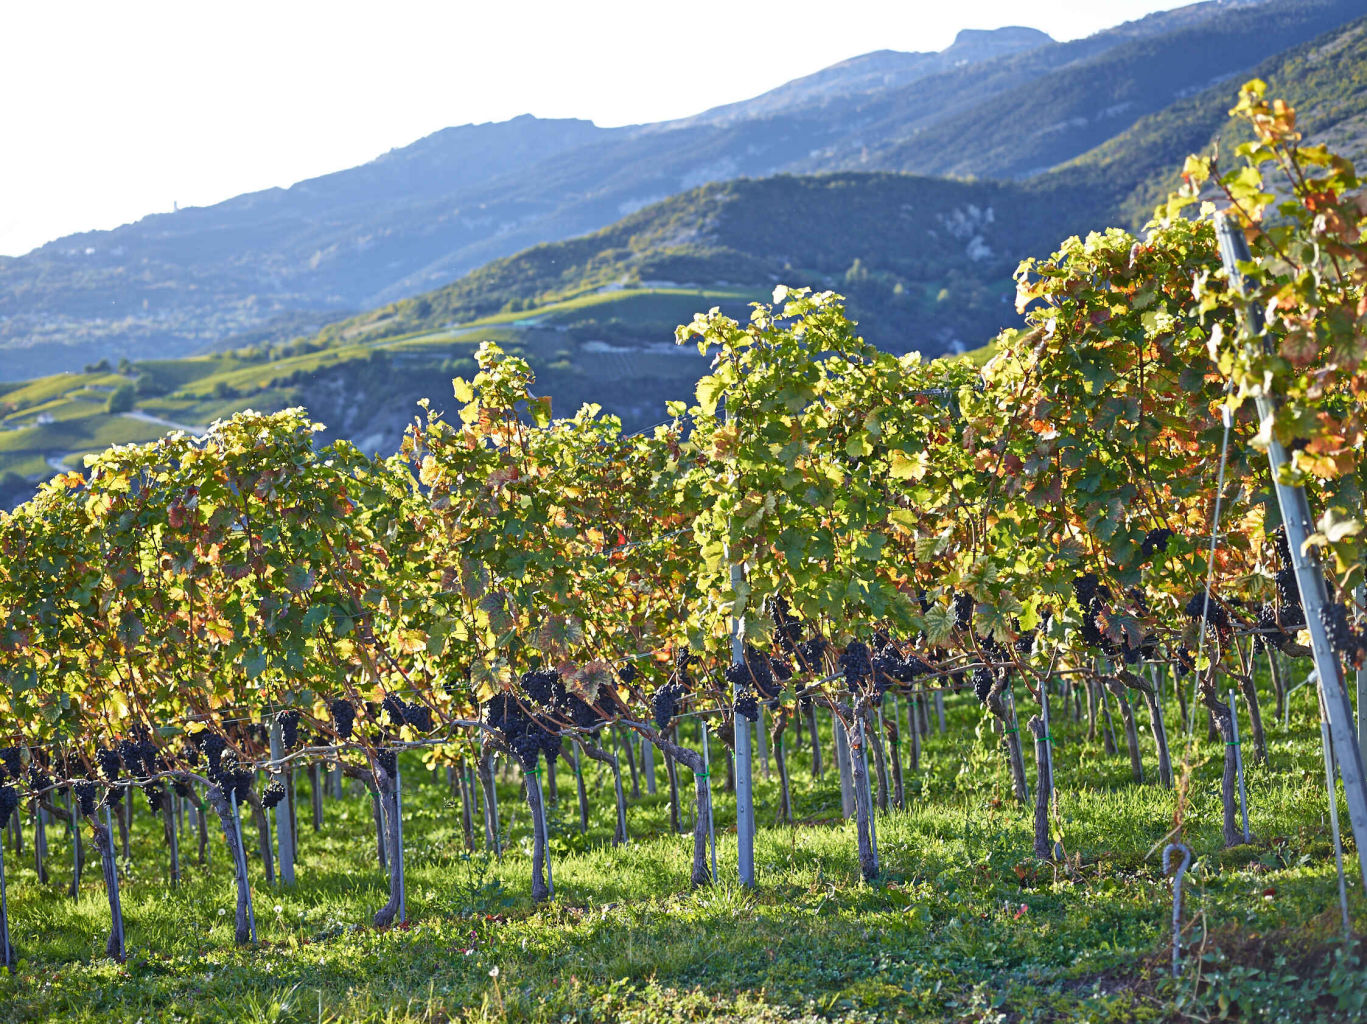 A field of vines in Sierre, Valais, Switzerland